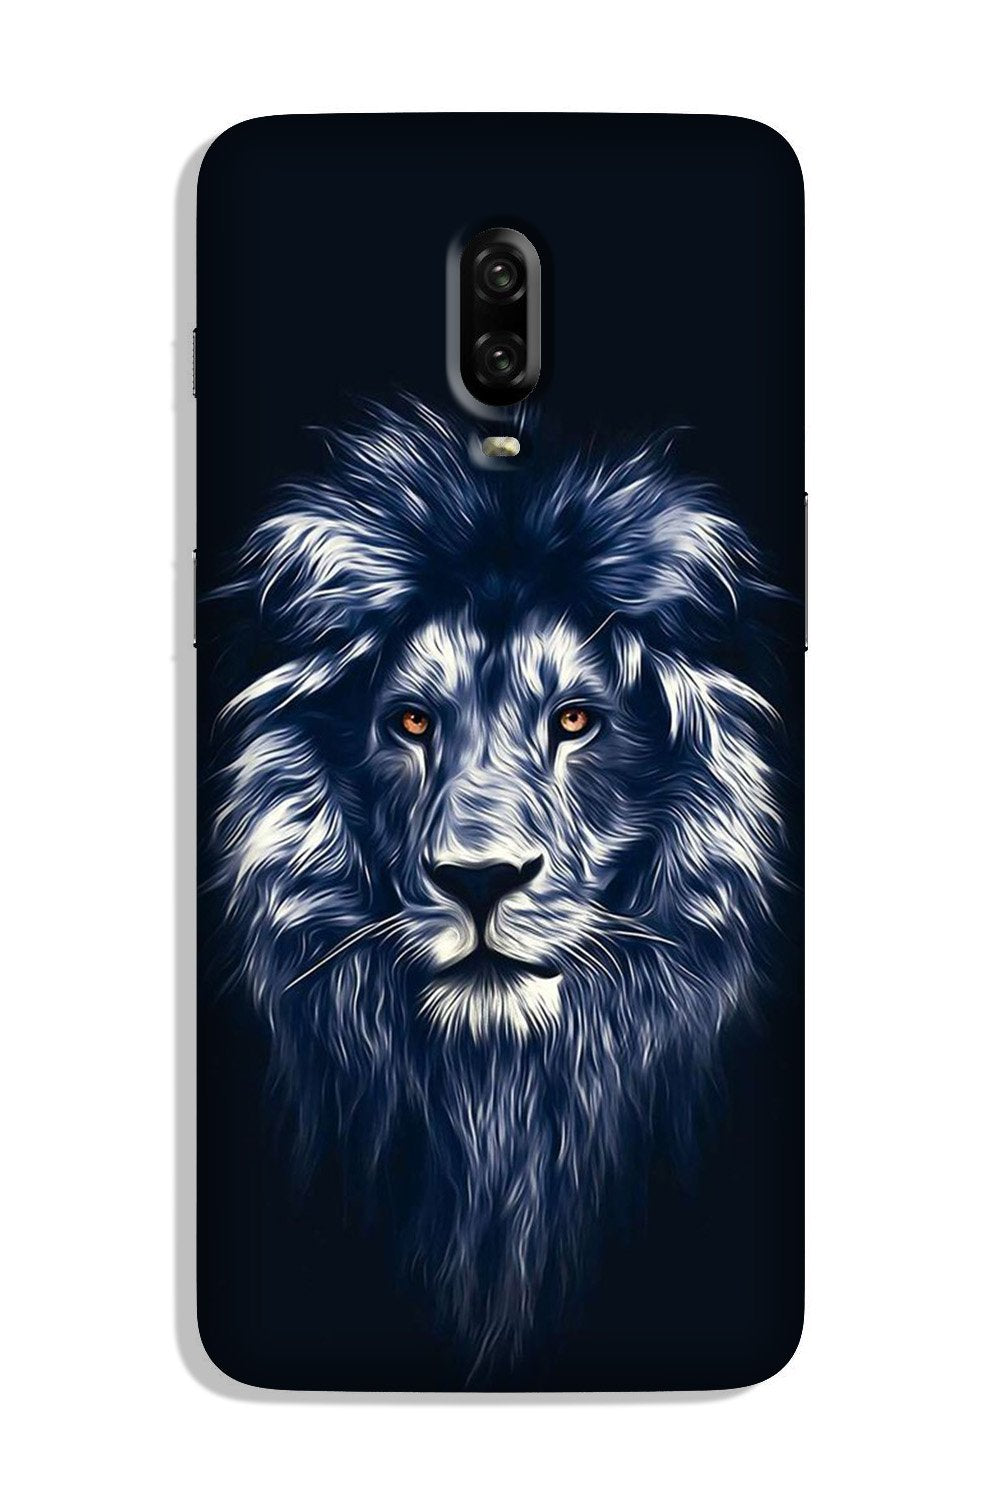 Lion  Case for OnePlus 6T (Design No. 281)